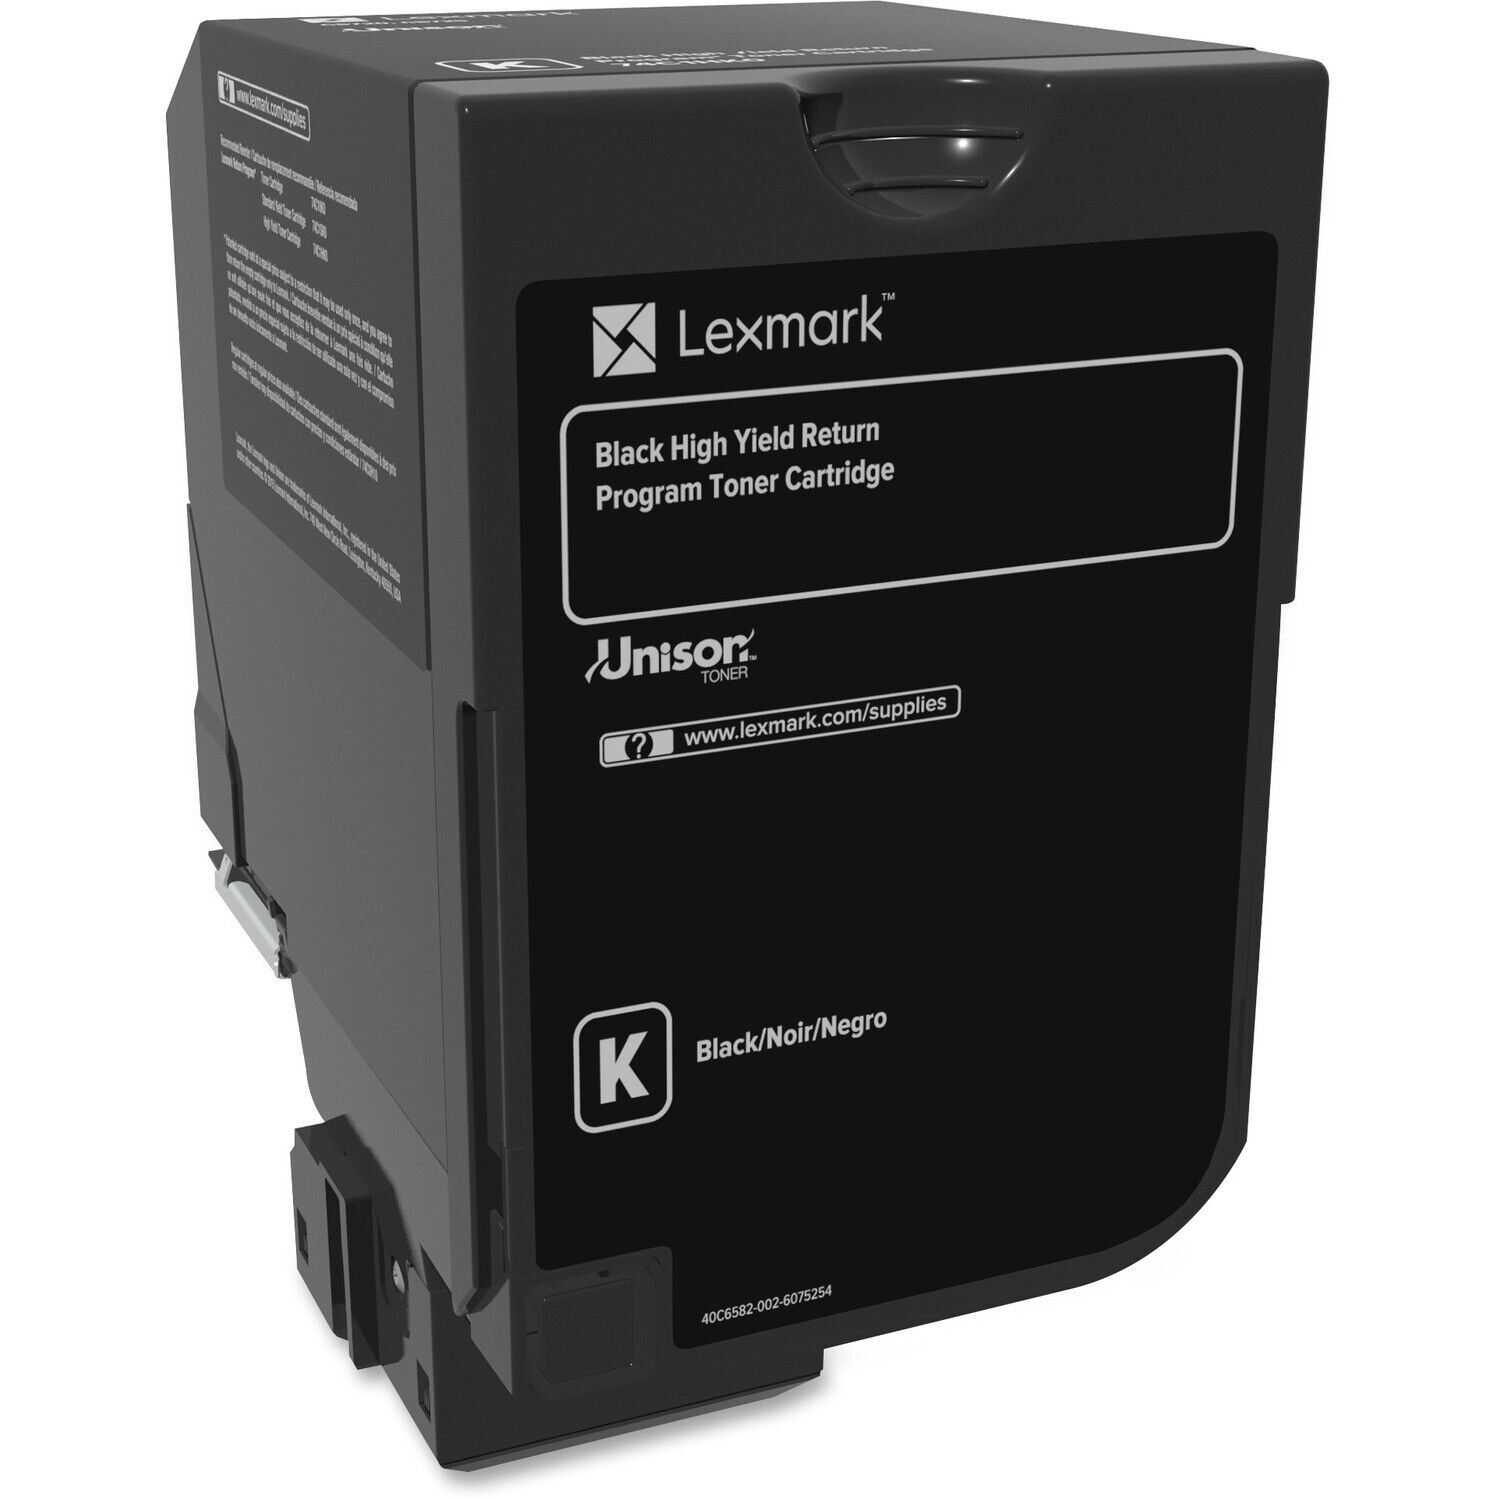 Lexmark Rtn Toner Cartridge f/CS720/725 20 000 Page Yield BK 74C1HK0